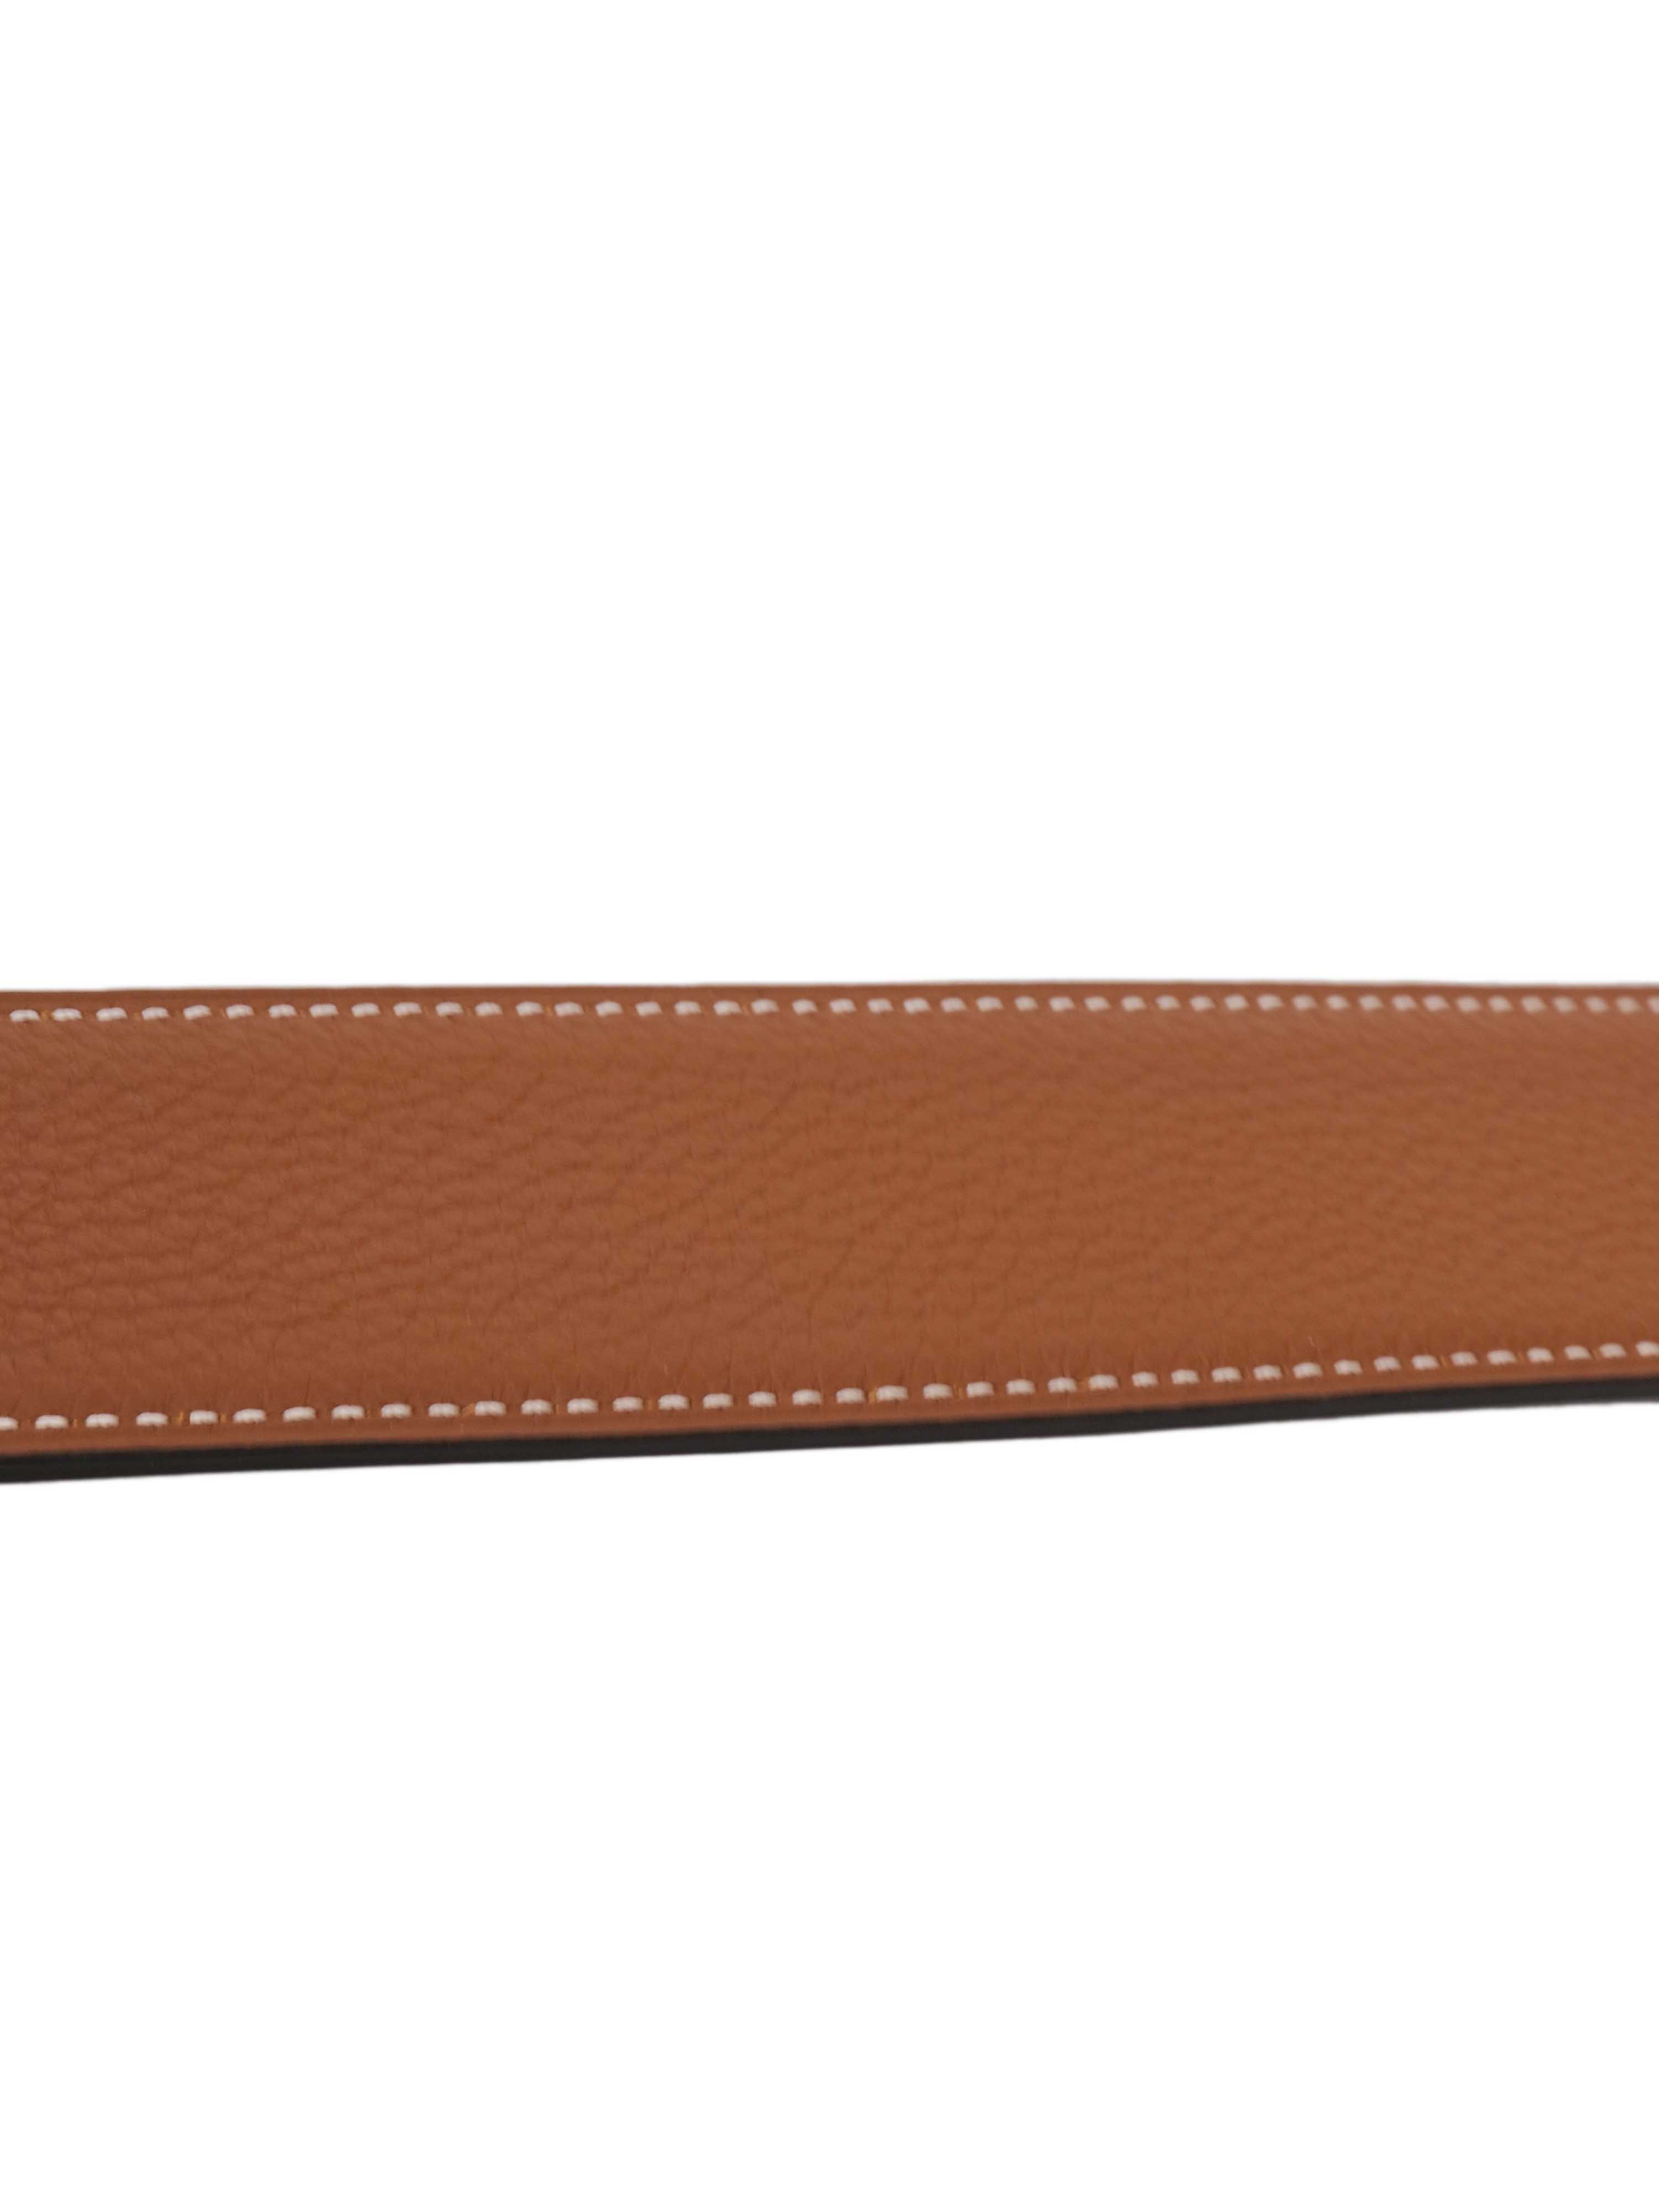 H Belt Buckle & Reversible Leather Strap.